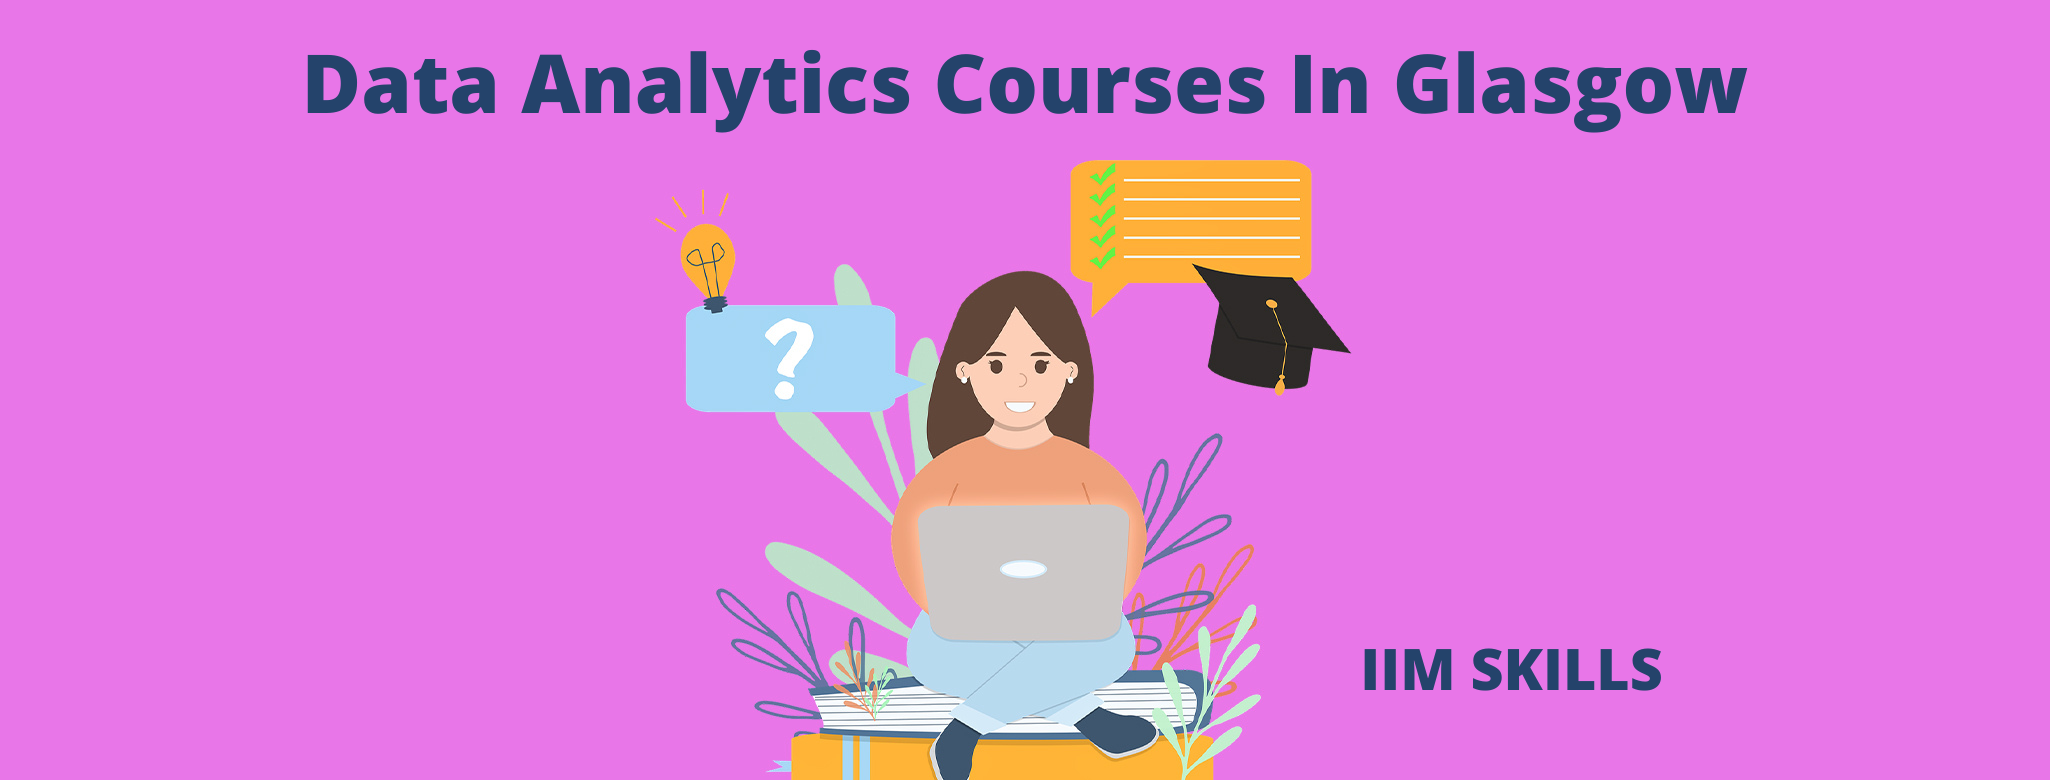 Data Analytics courses in Glasgow